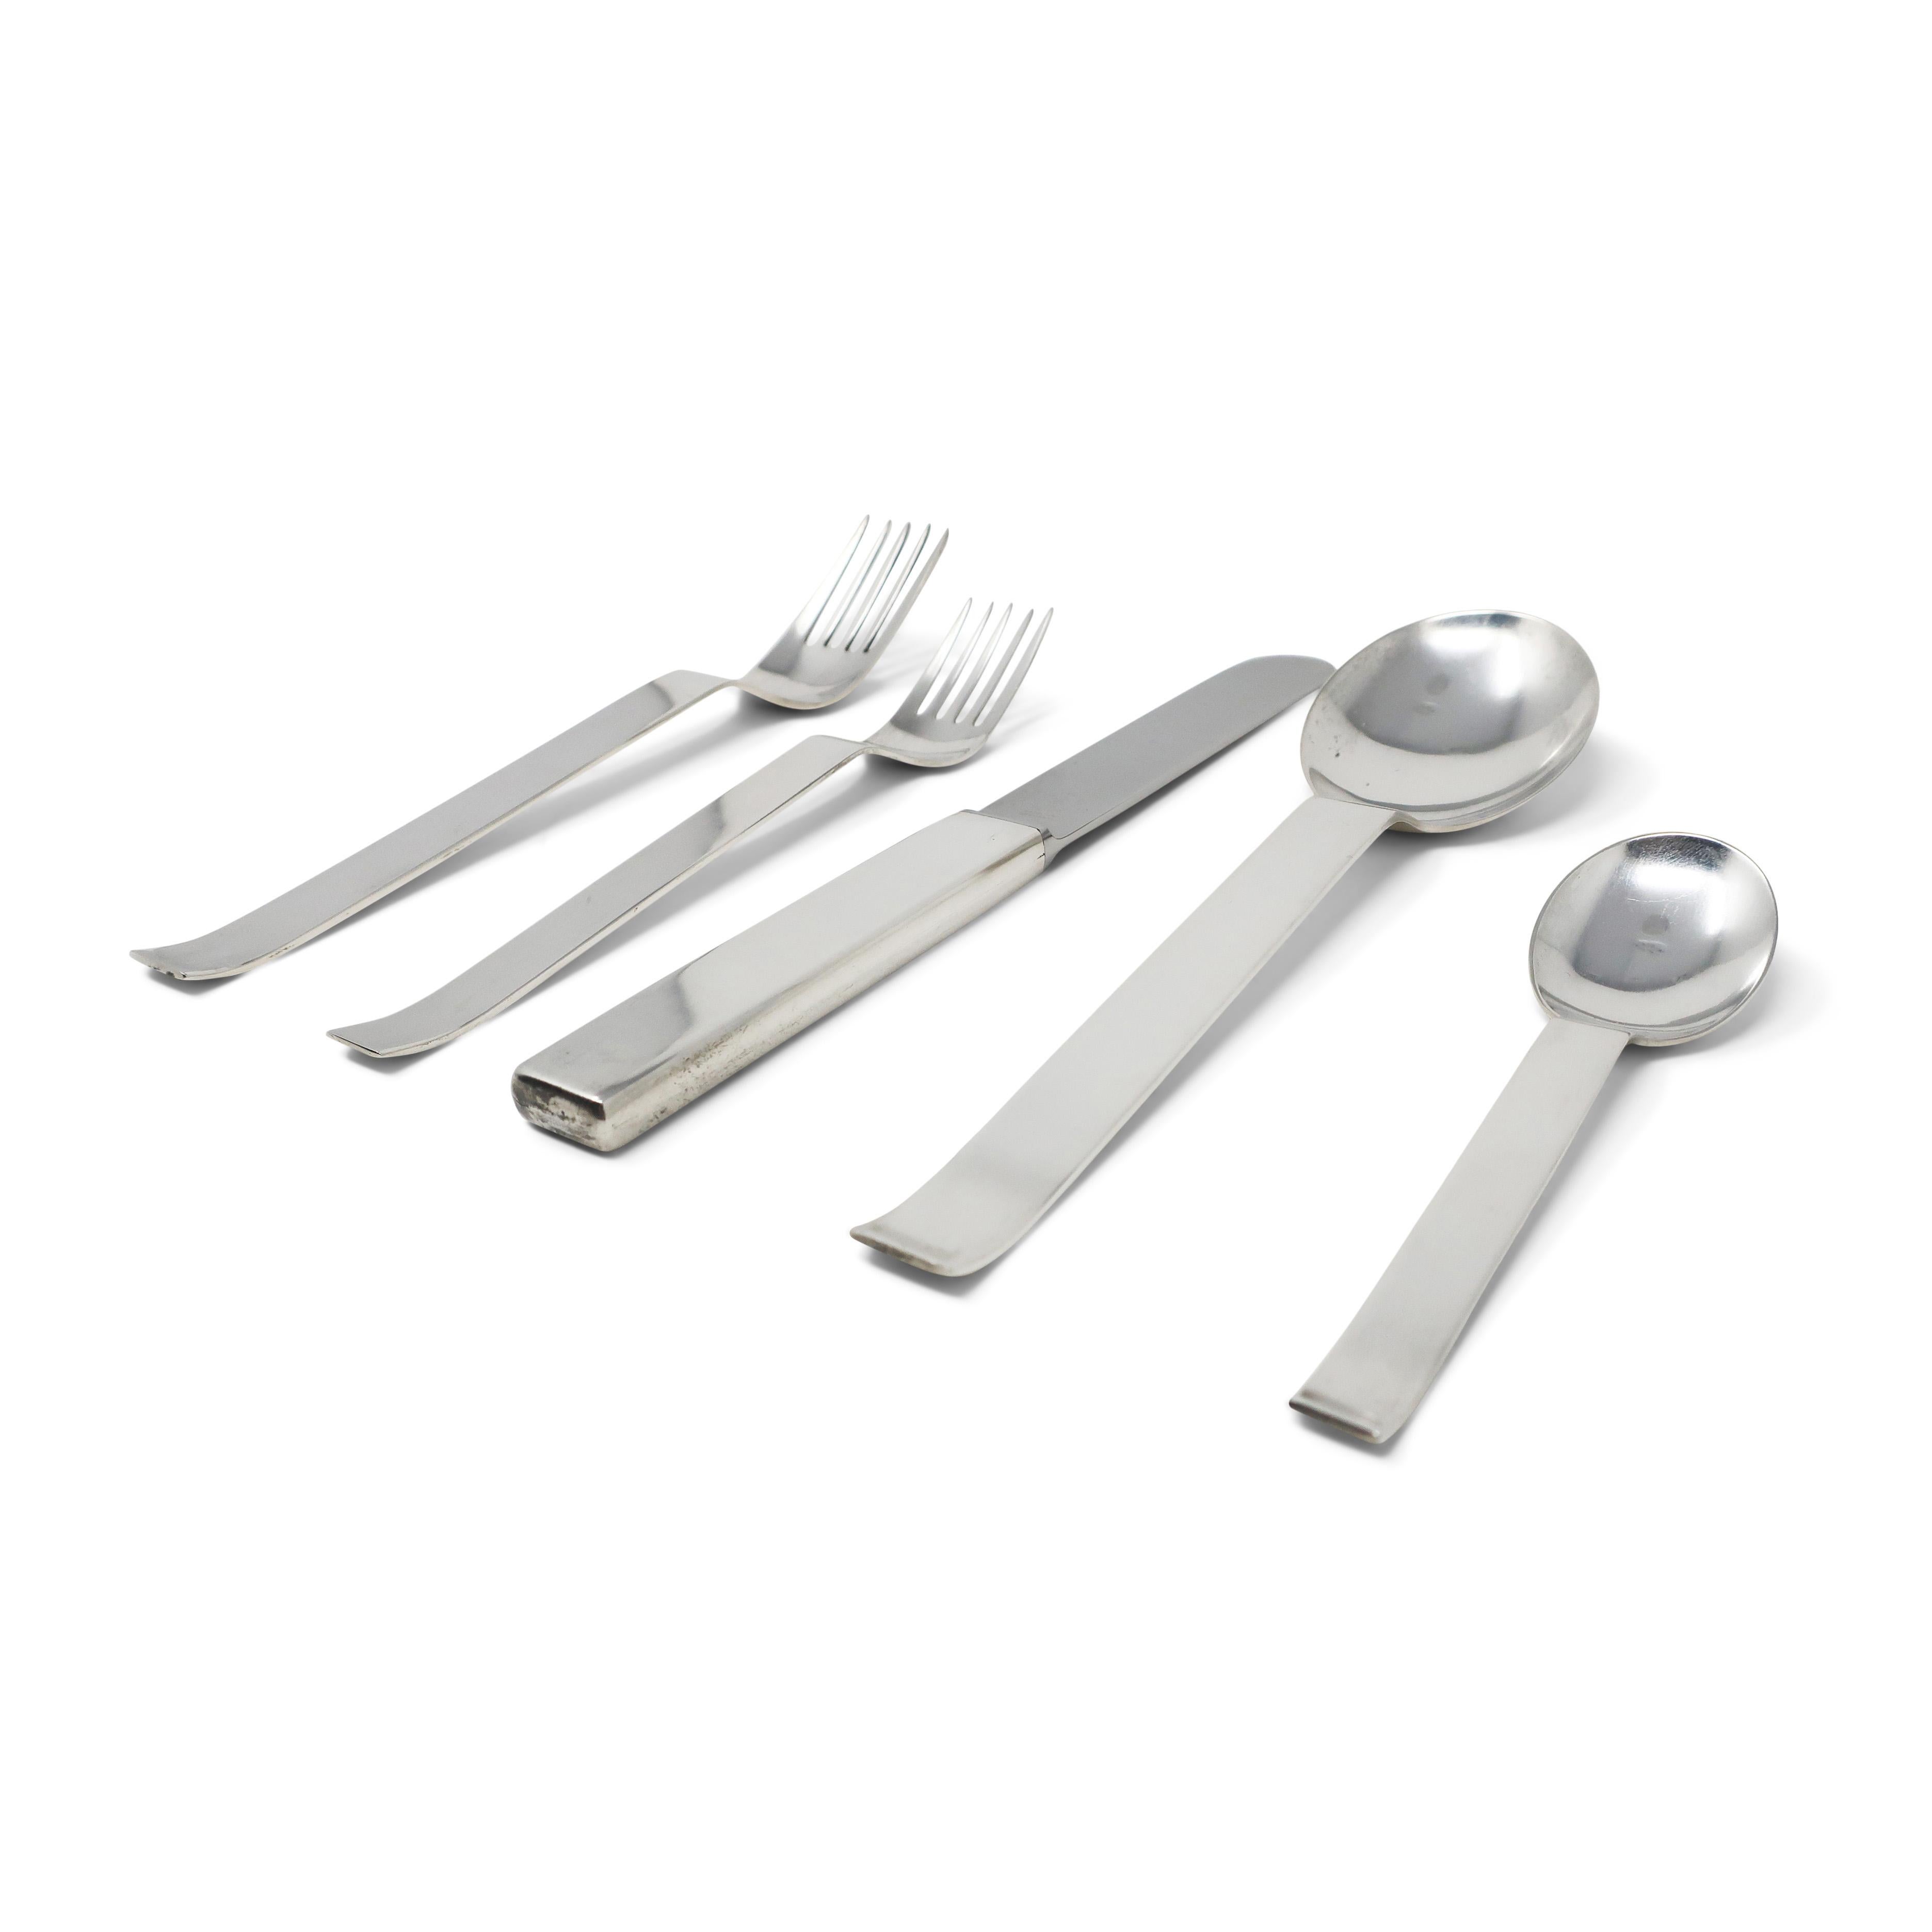 Bauhaus Pott No. 35 Five Piece Sterling Silver Cutlery Set by Carl Pott